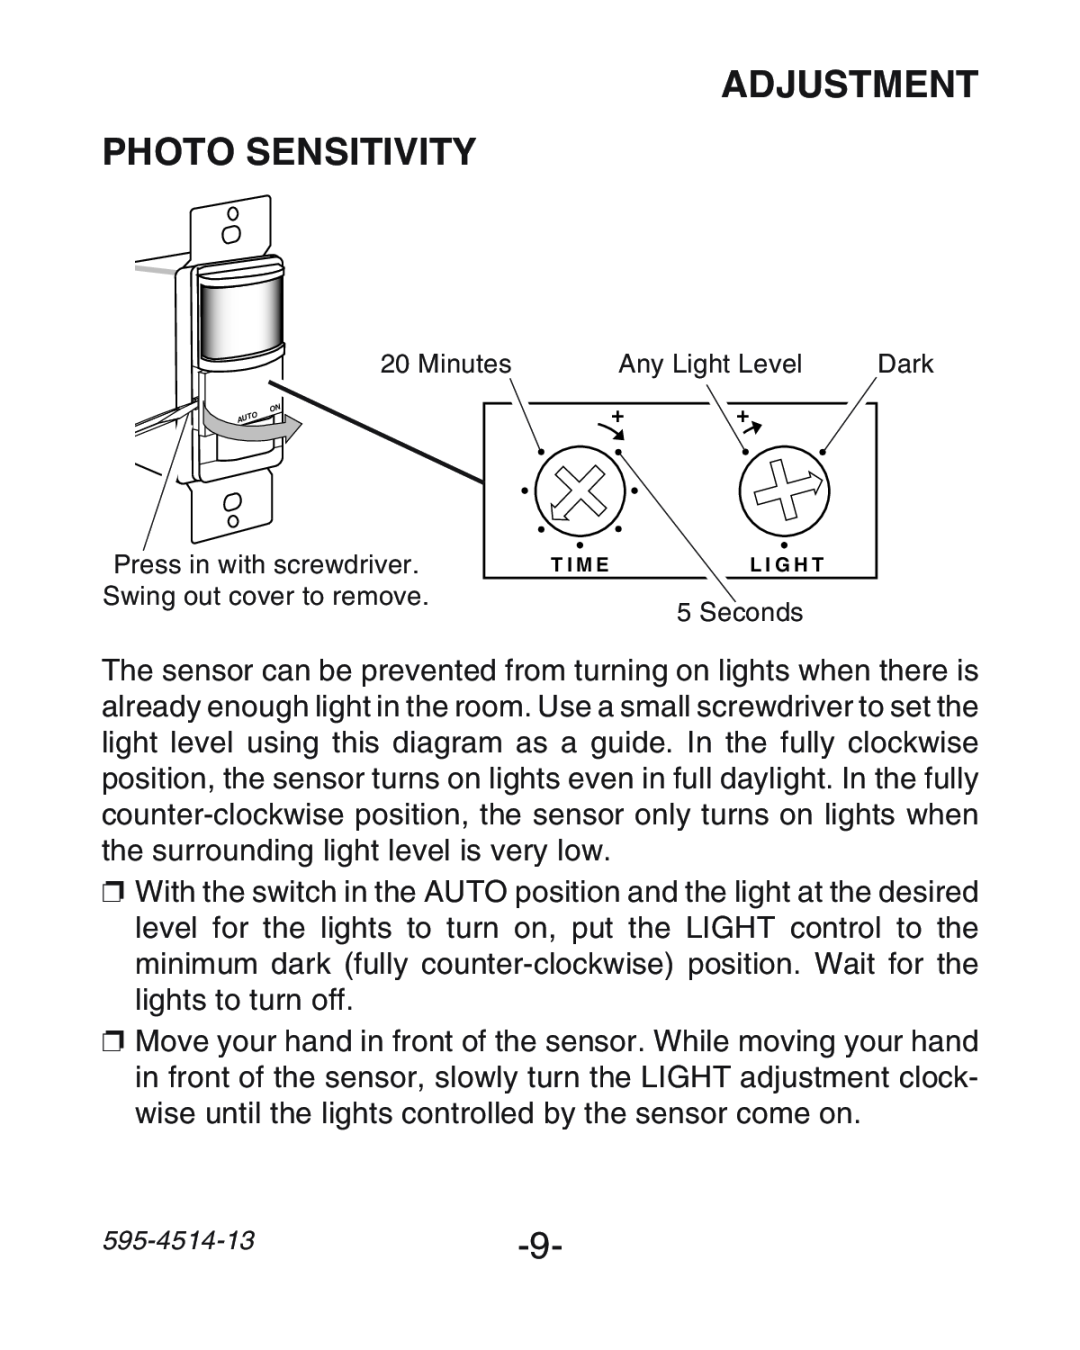 Heath Zenith SL-6107 manual Adjustment Photo Sensitivity, Minutes, Any Light Level, Dark, Seconds 